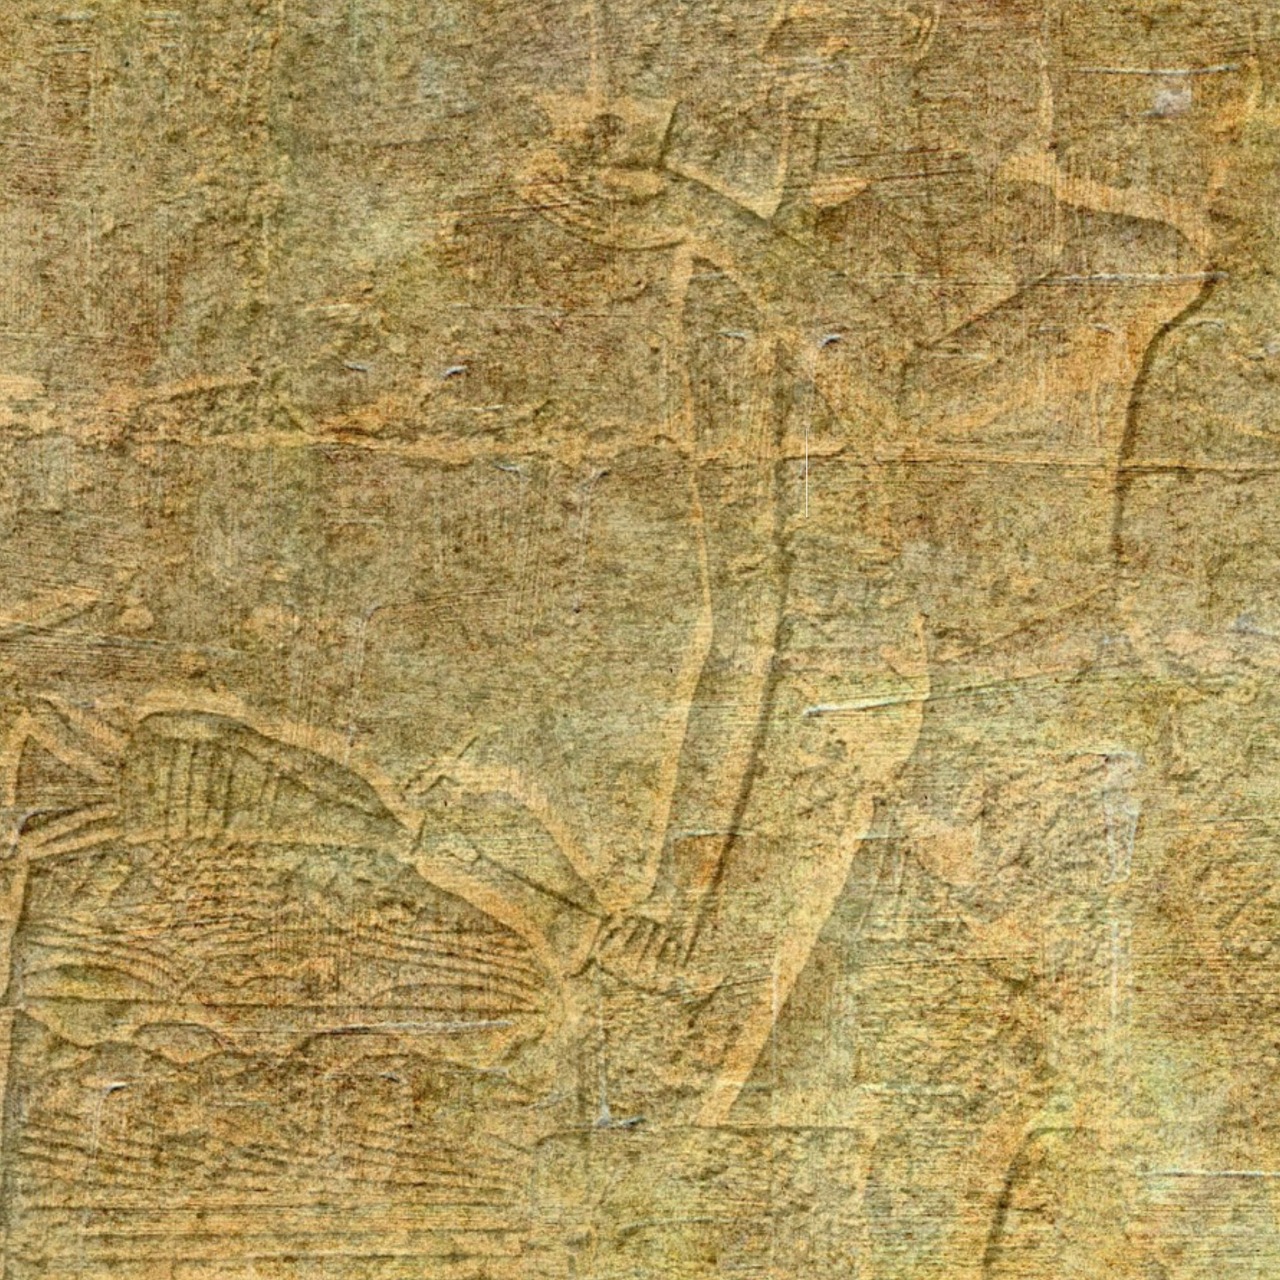 egyptian wall hieroglyphs free photo